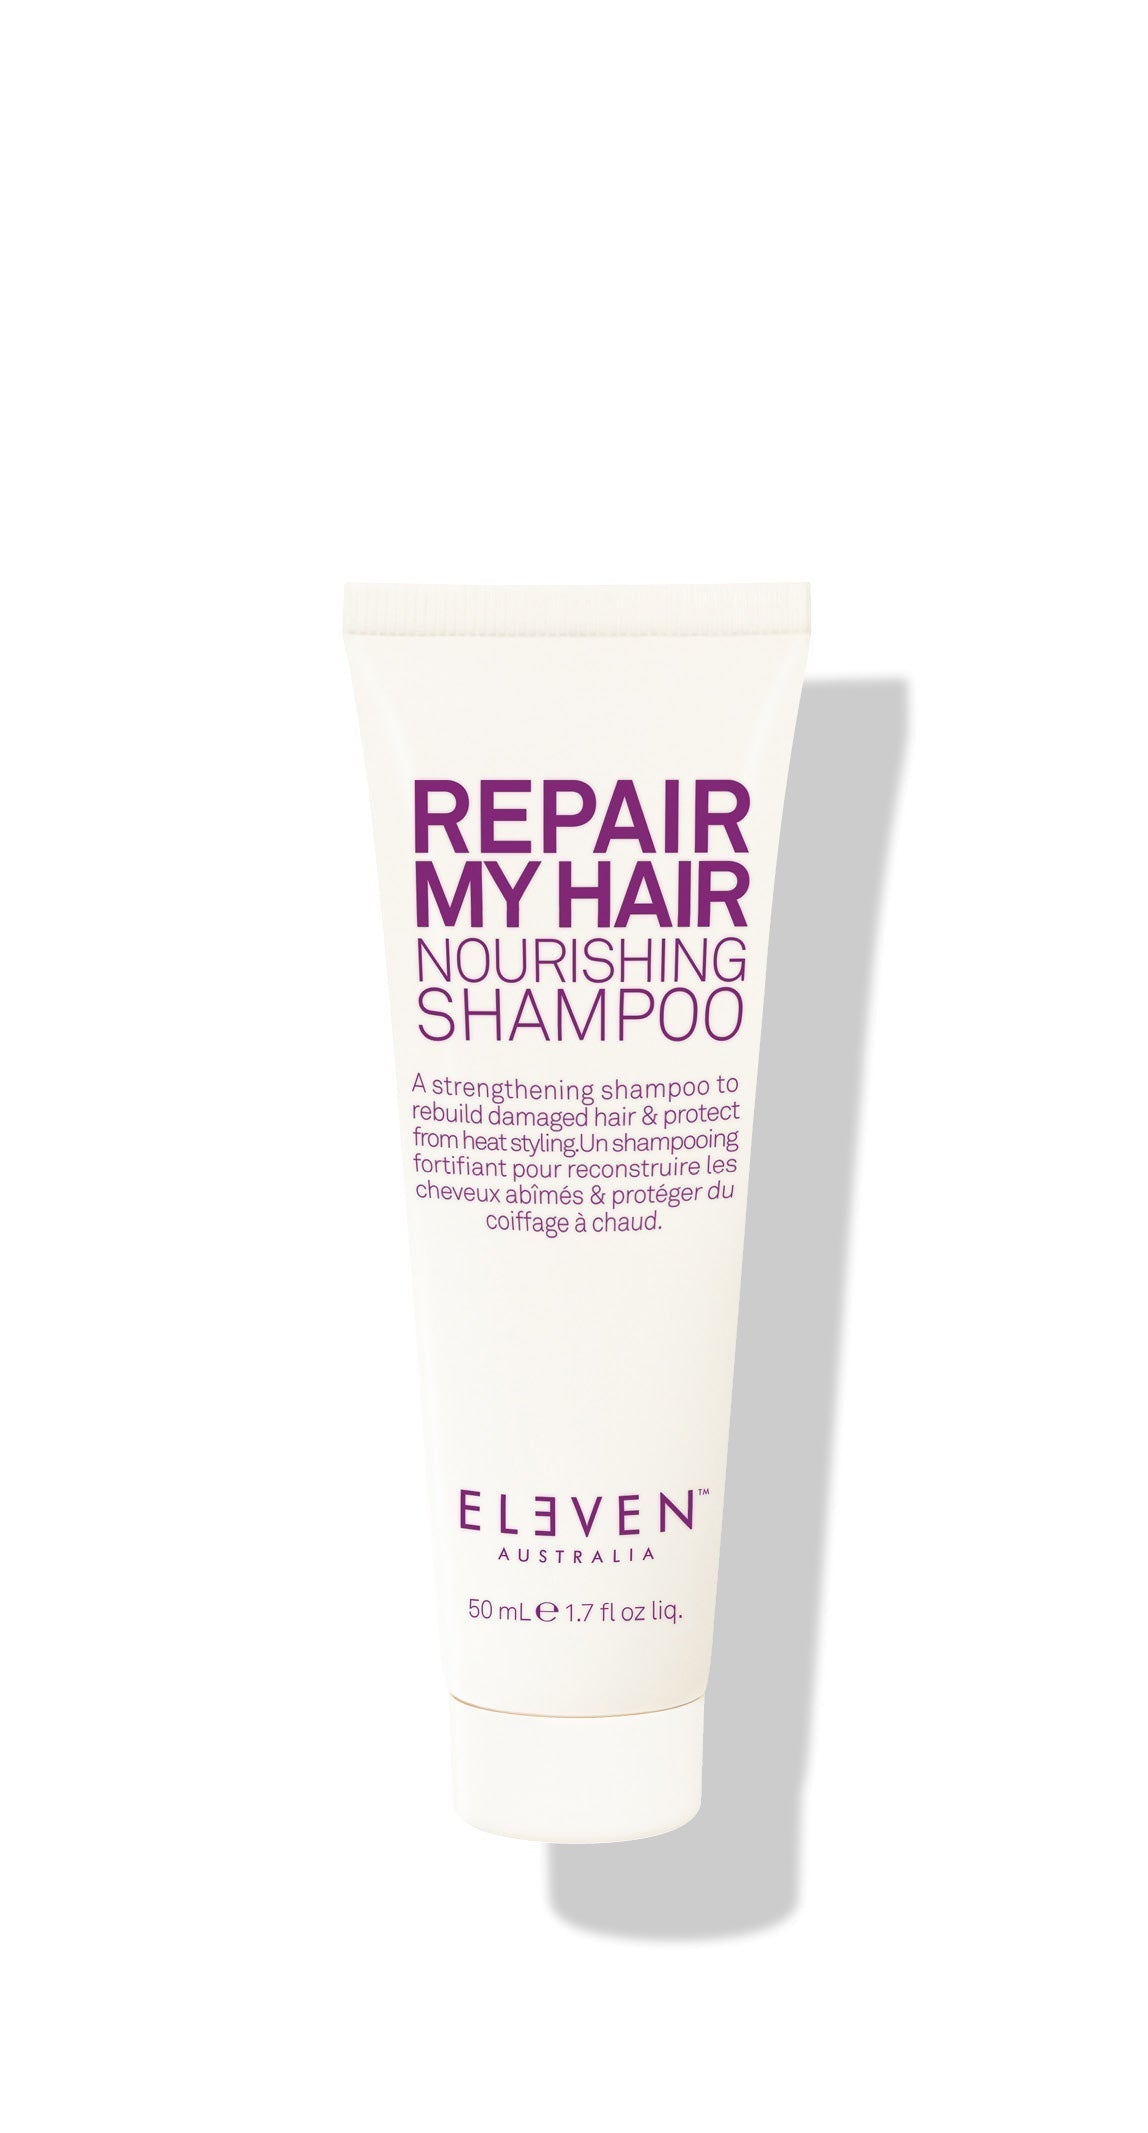 Repair My Hair Nourishing Shampoo - 50ml - ELEVEN Australia